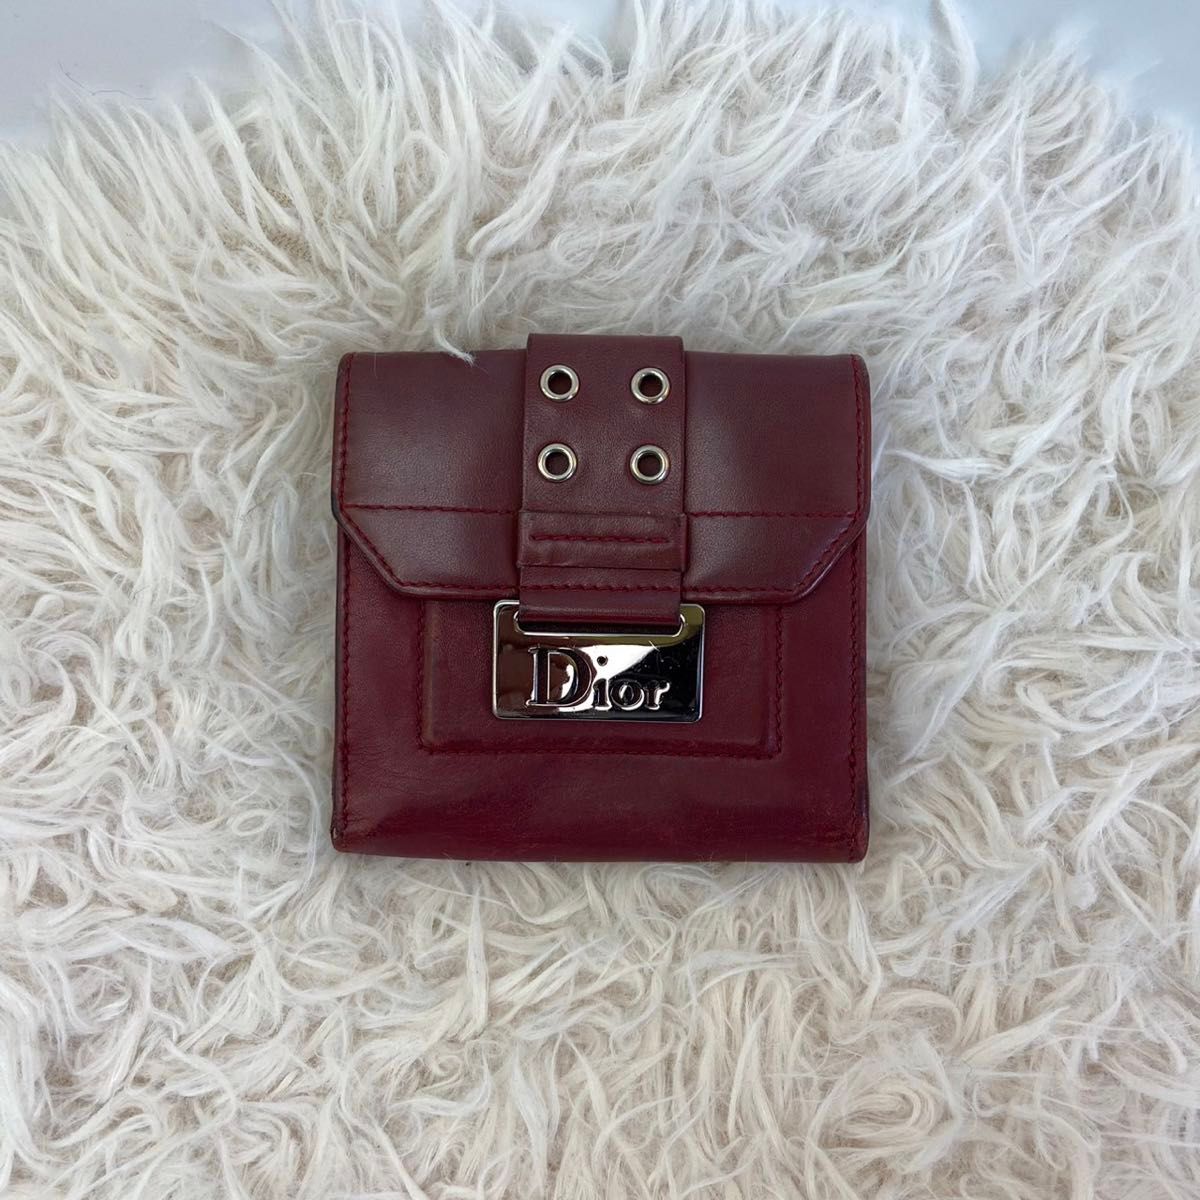 【Christian Dior】クリスチャン ディオール 二つ折り コンパクト 財布 赤